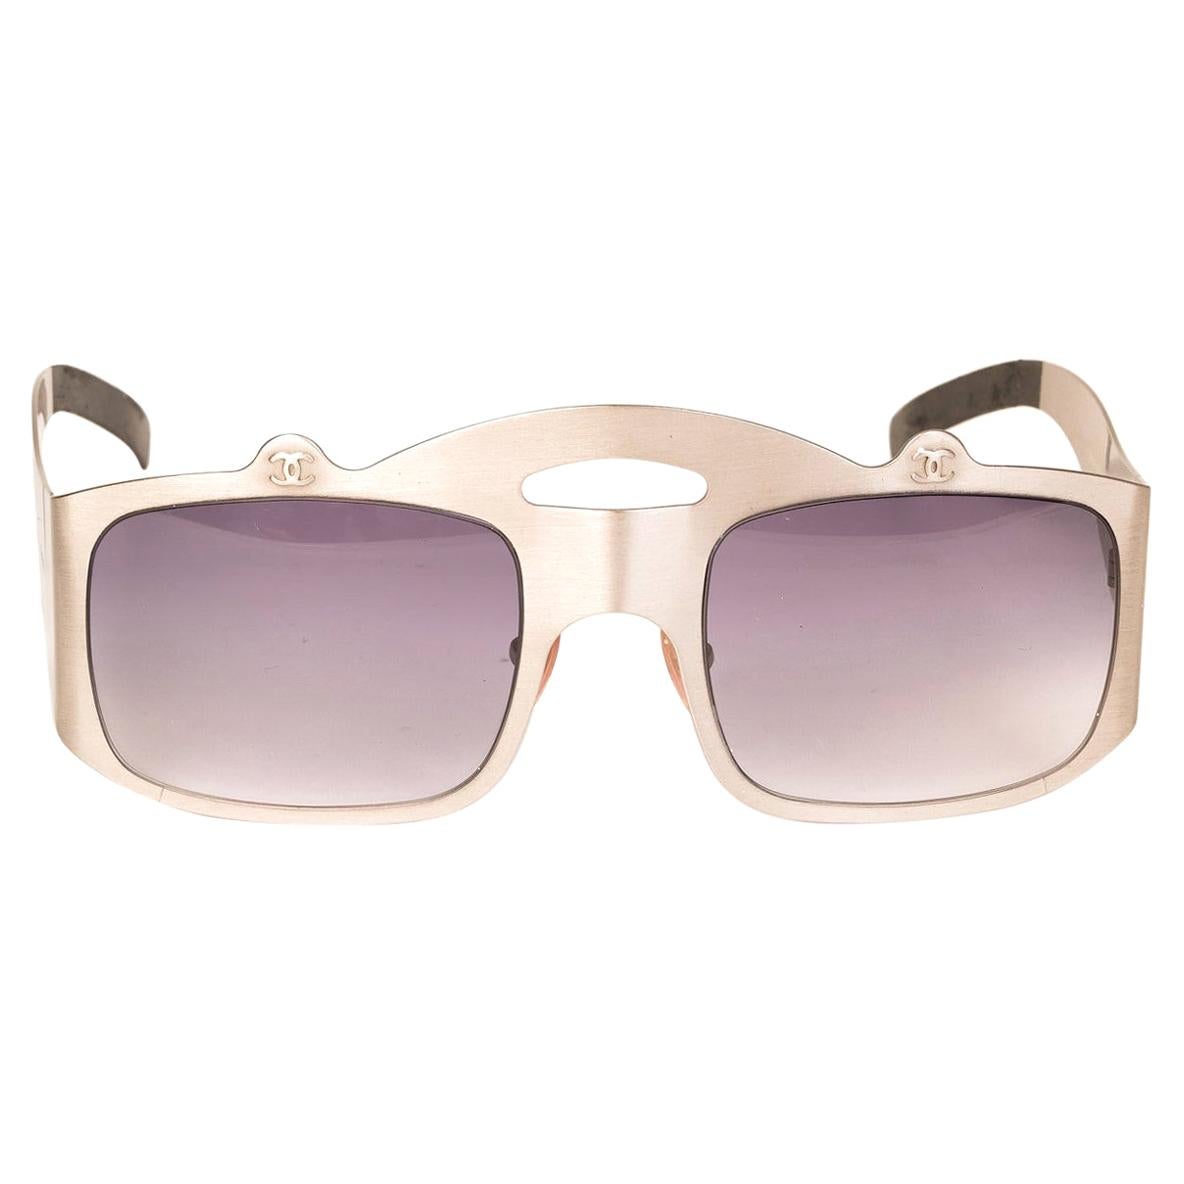 Chanel Sunglasses 15652 43906 For Sale